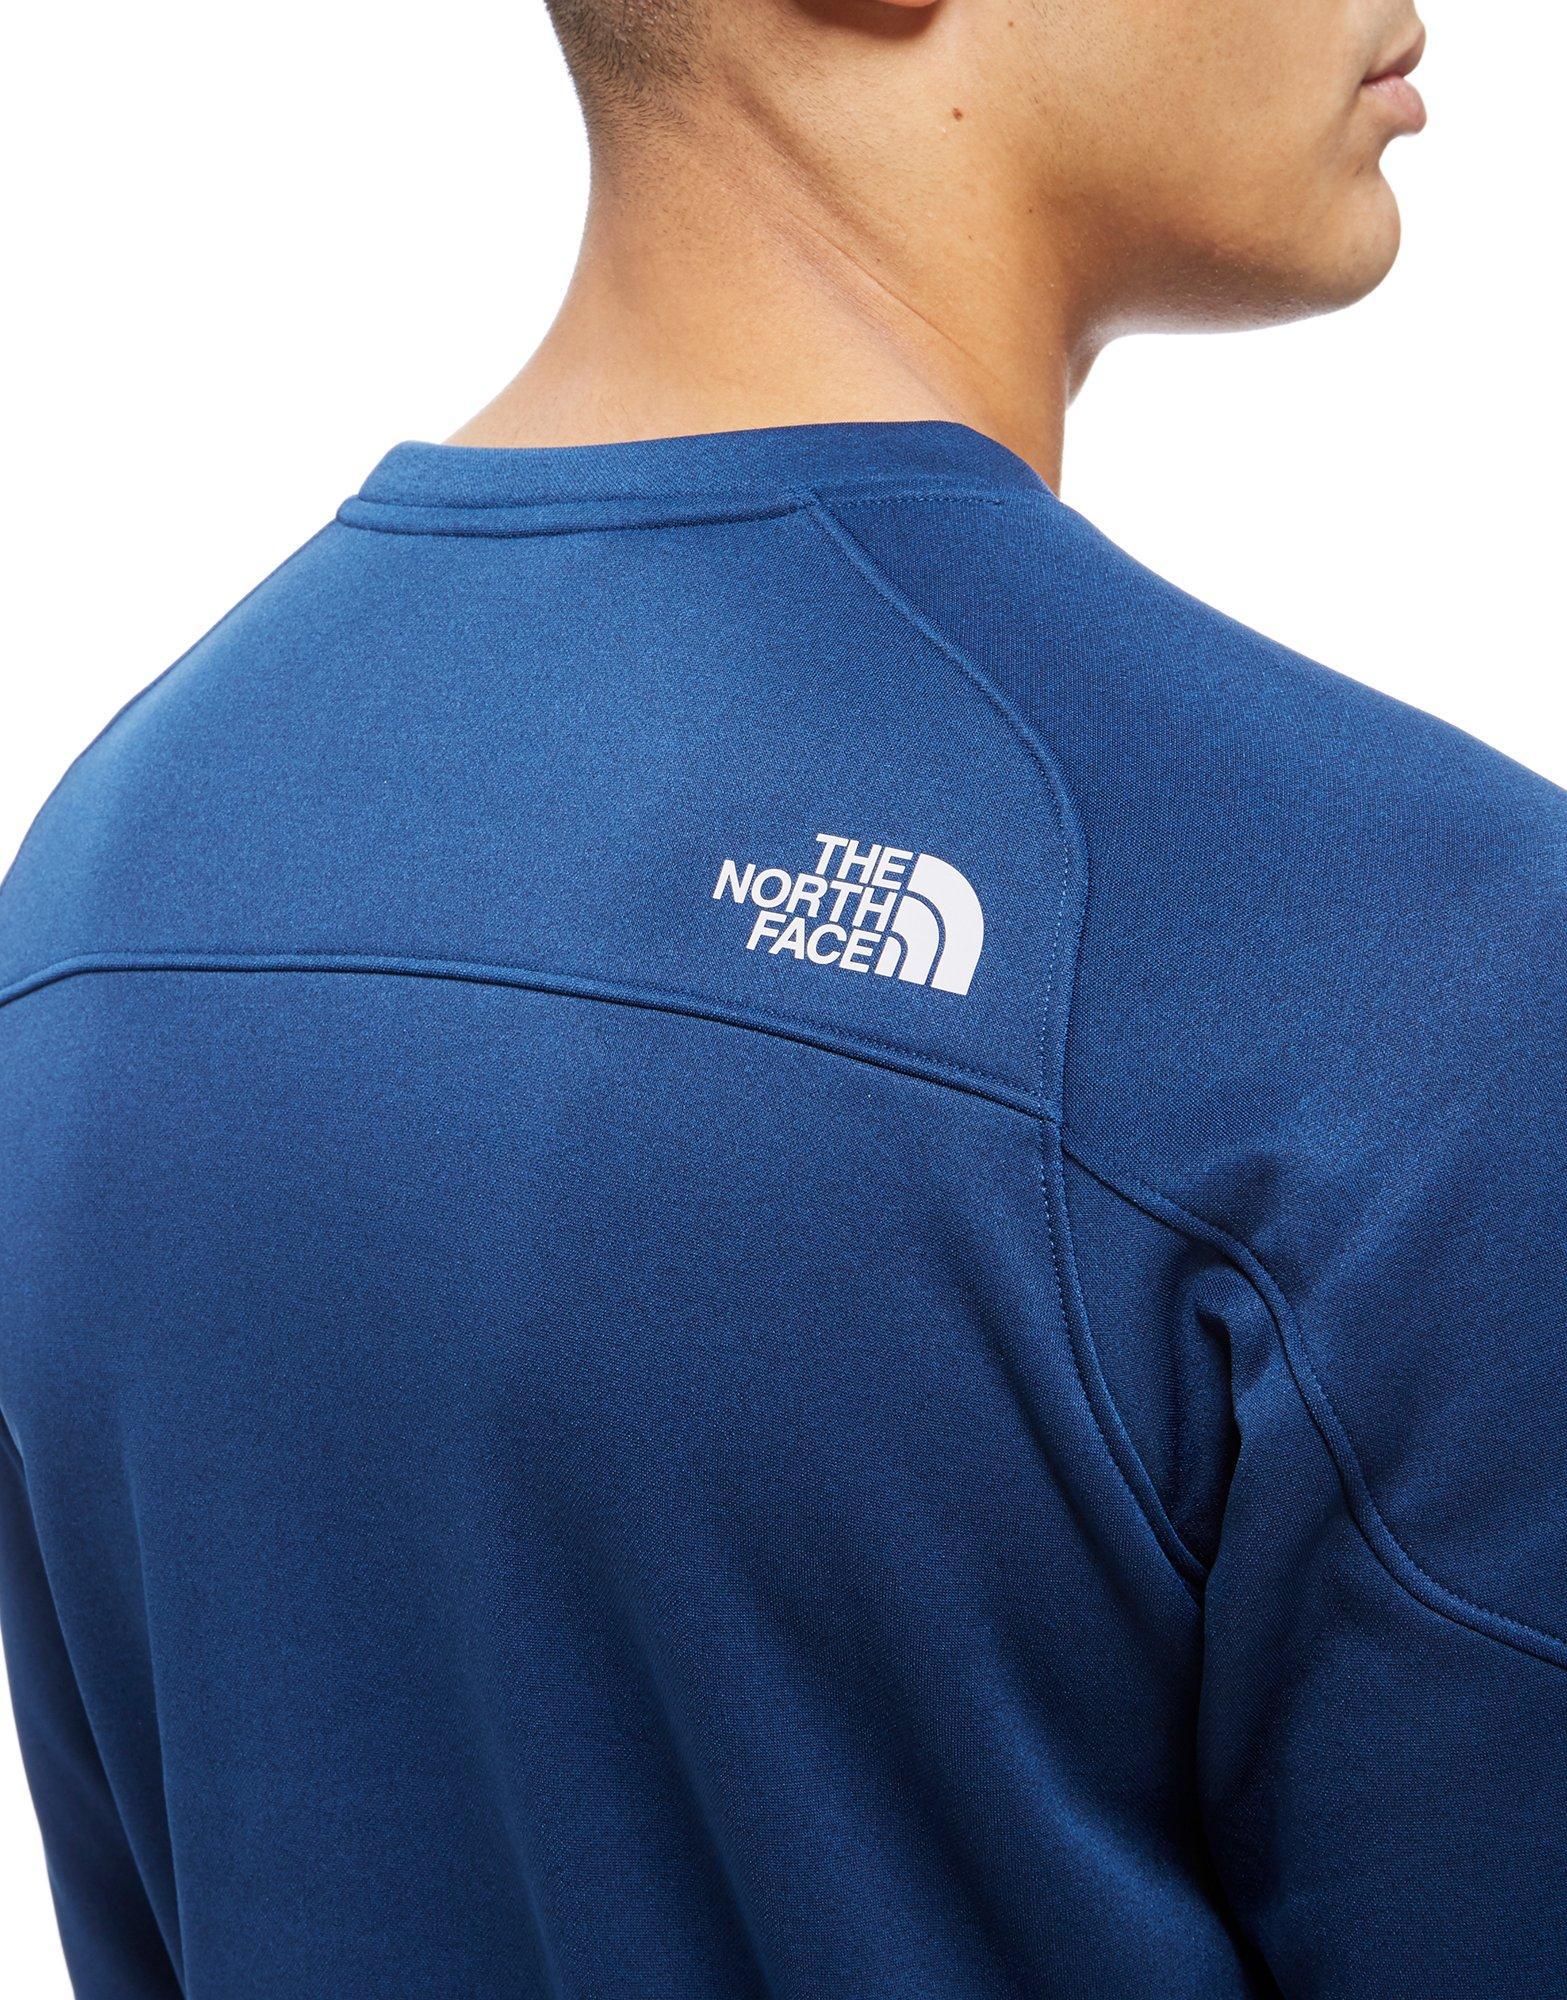 Lyst - The North Face Mittelegi Crew Sweatshirt in Blue for Men